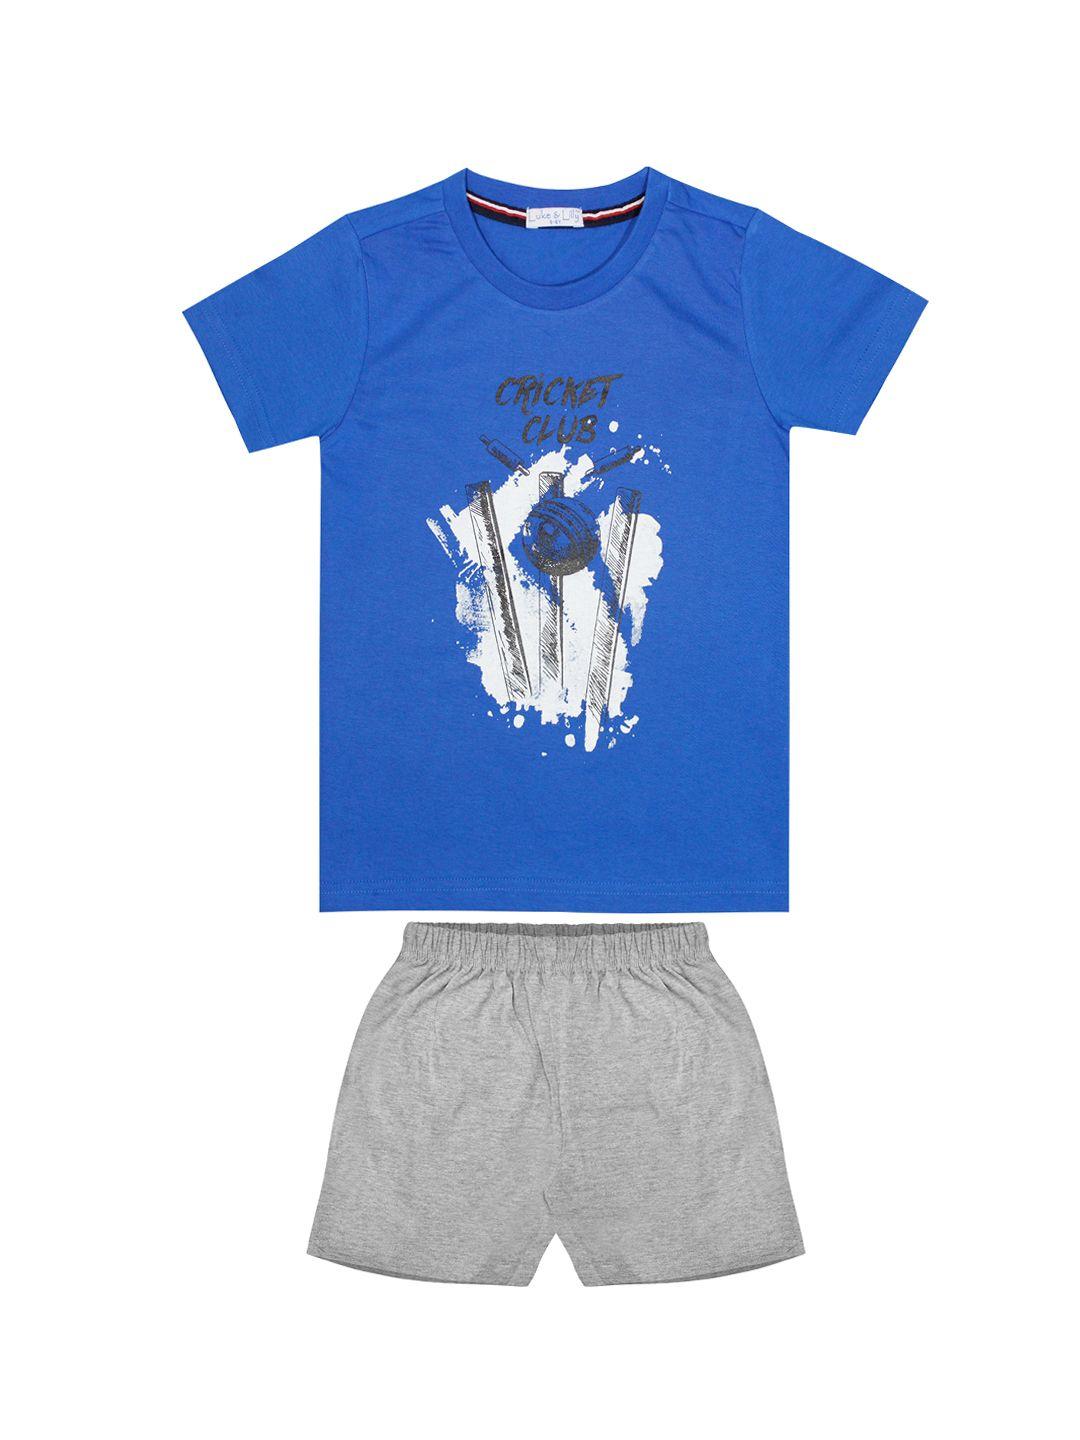 luke & lilly boys blue & grey printed clothing set